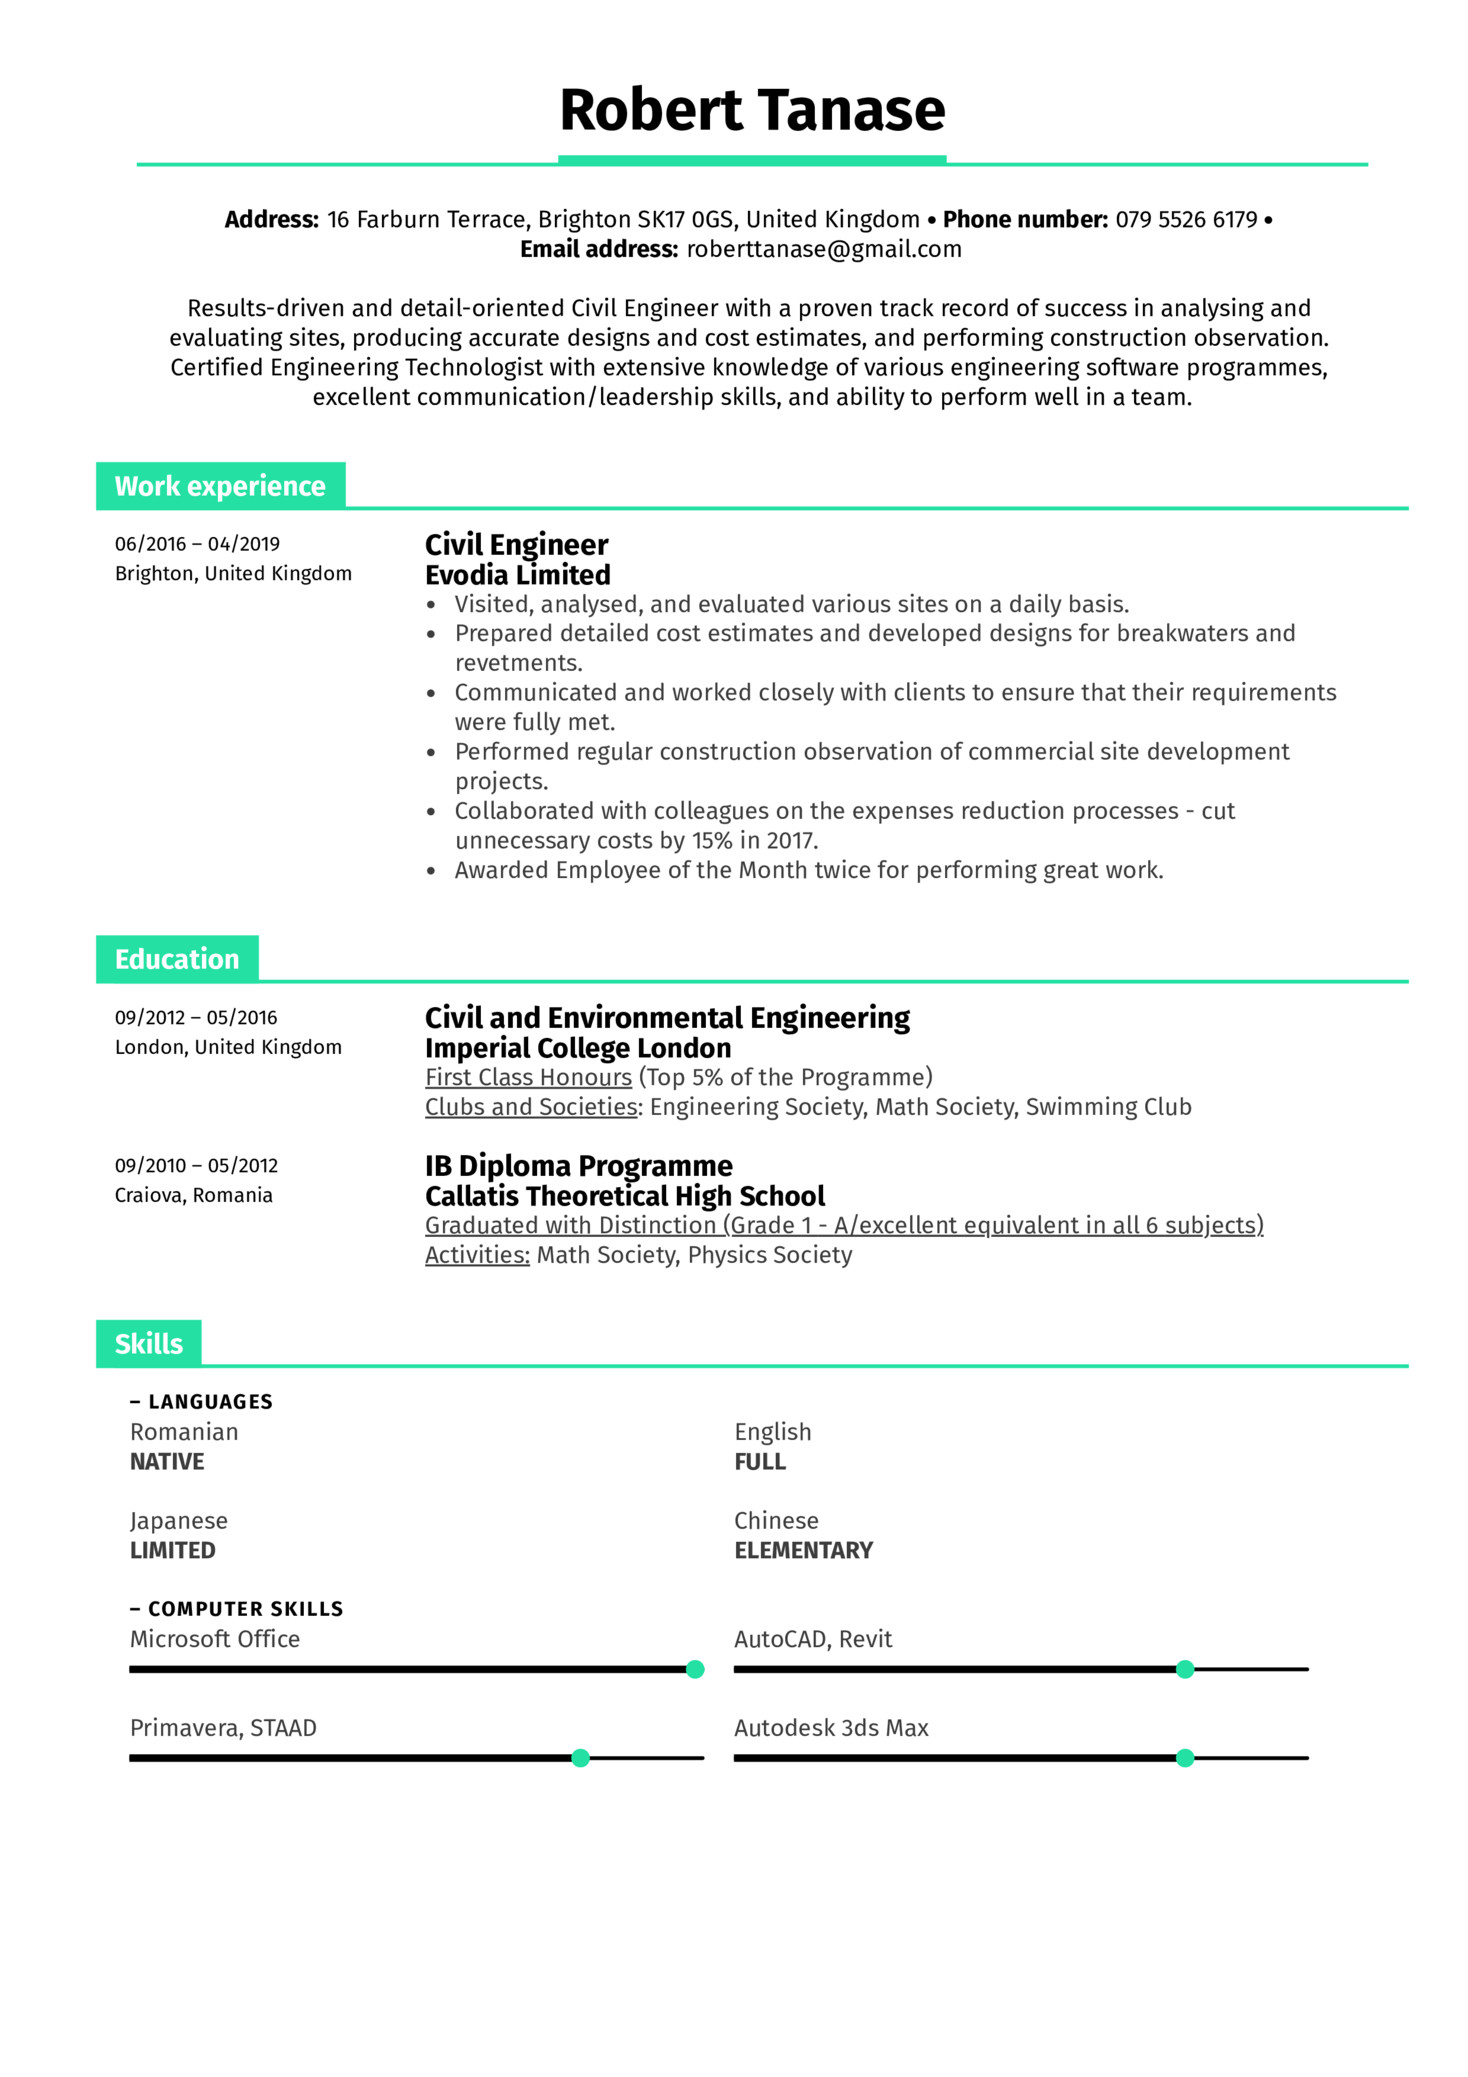 civil engineer resume sample